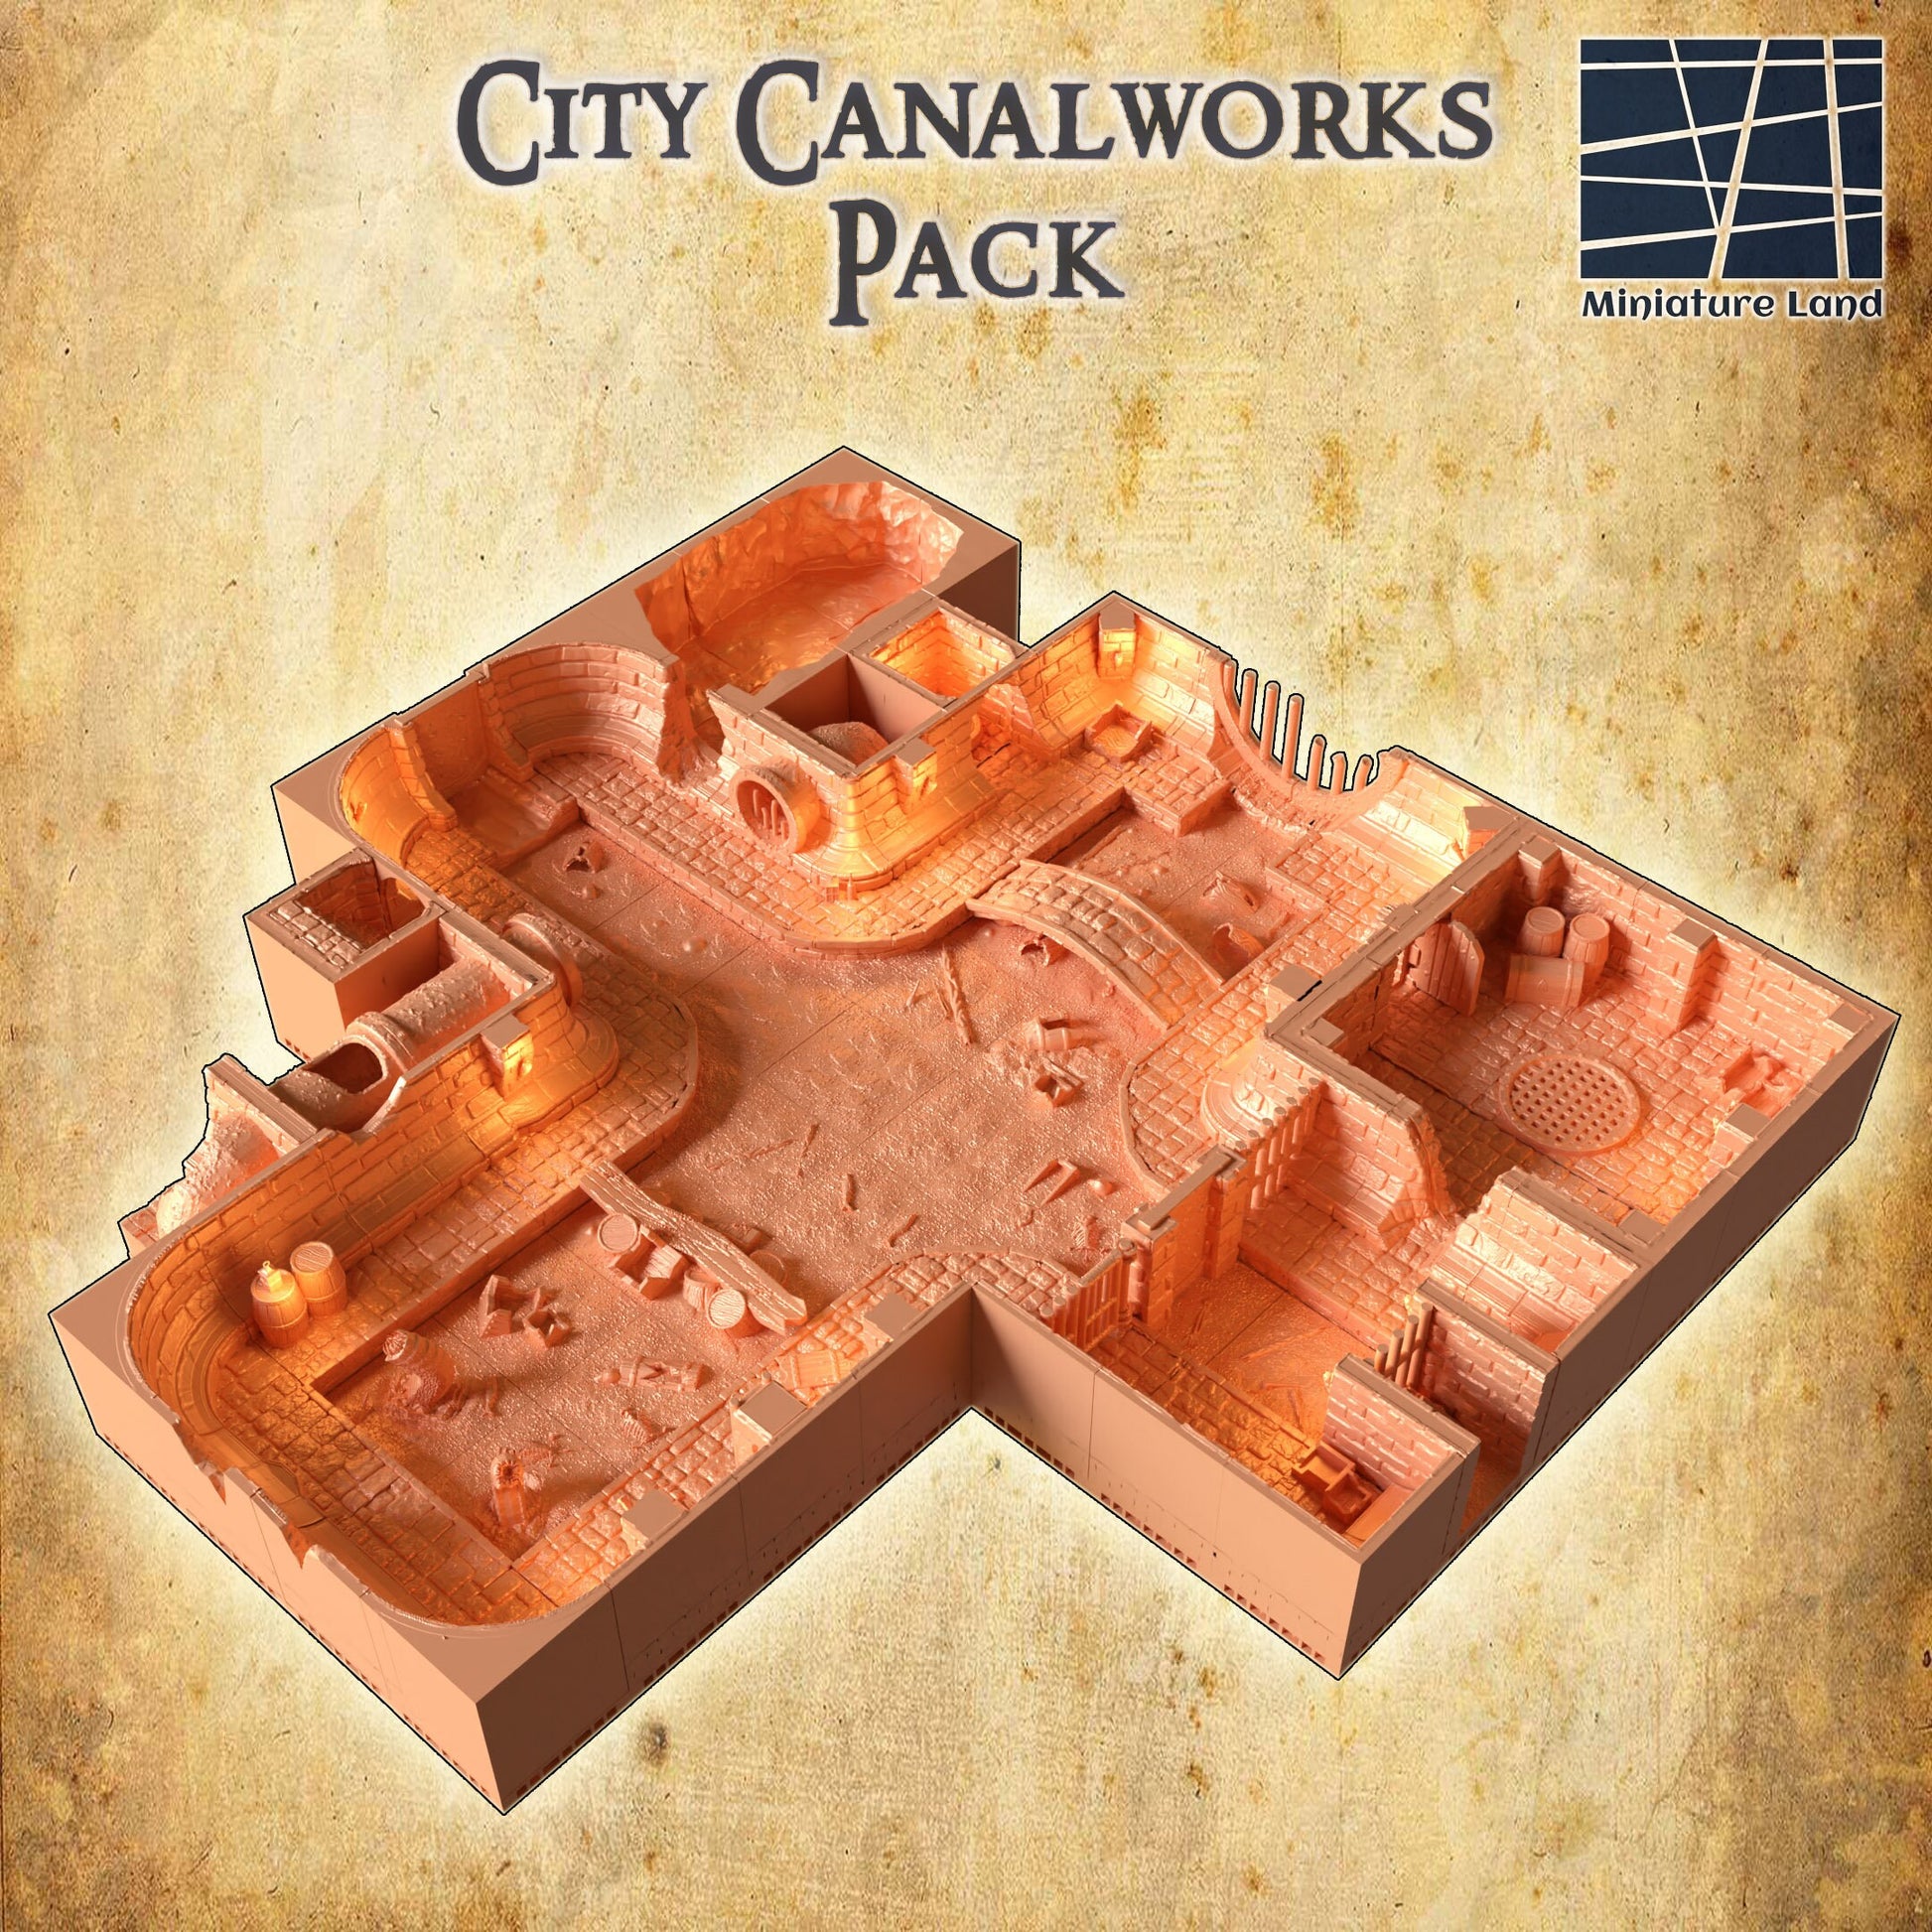 Modular City Canal works, sewer system, underground terrain